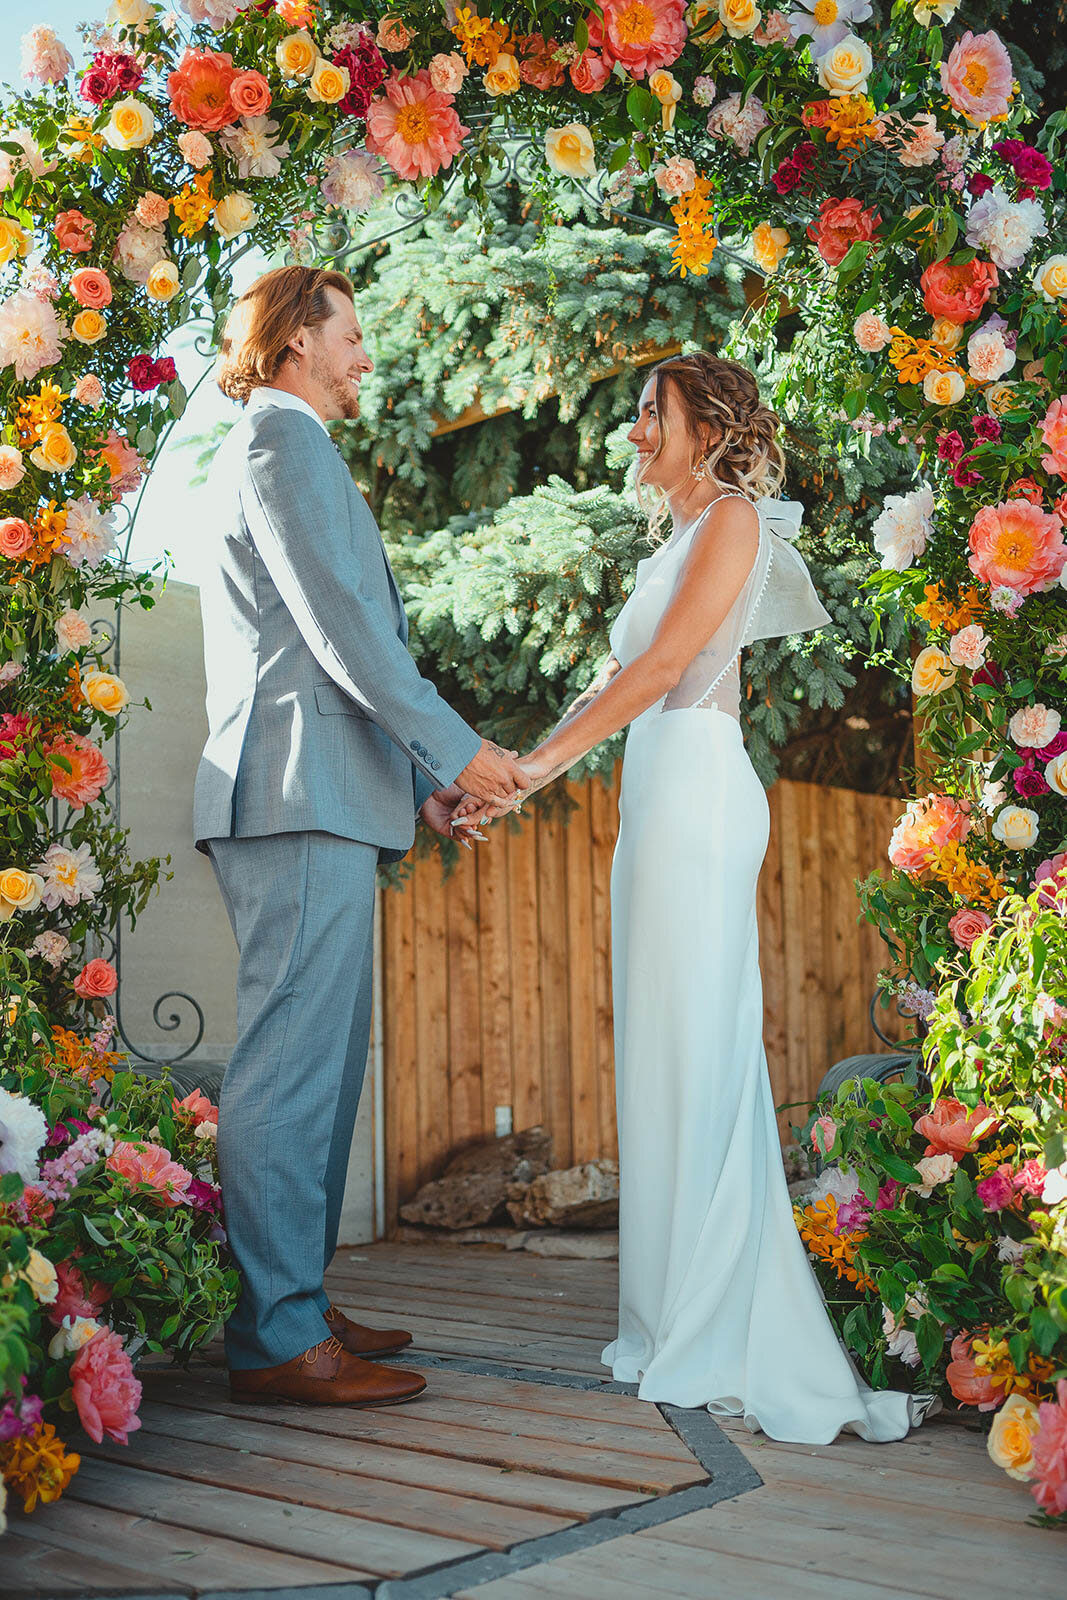 lindsay-plank-events-vineyard-bride-swish-list-bold-colourful-wedding-editorial-18.jpg